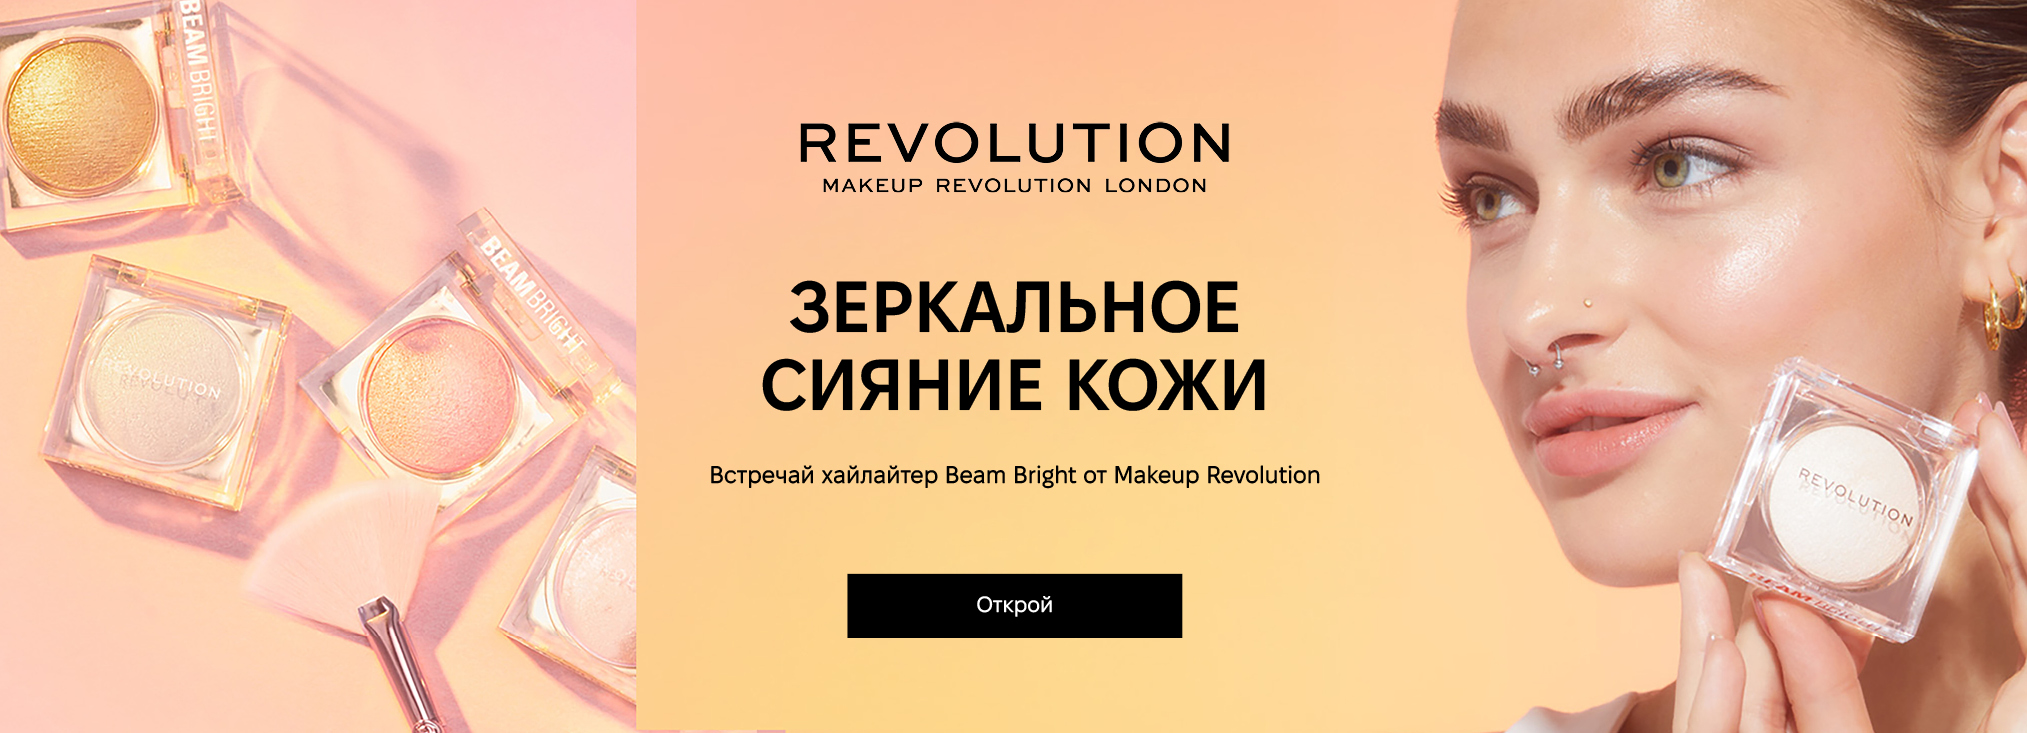 Makeup Revolution_2419